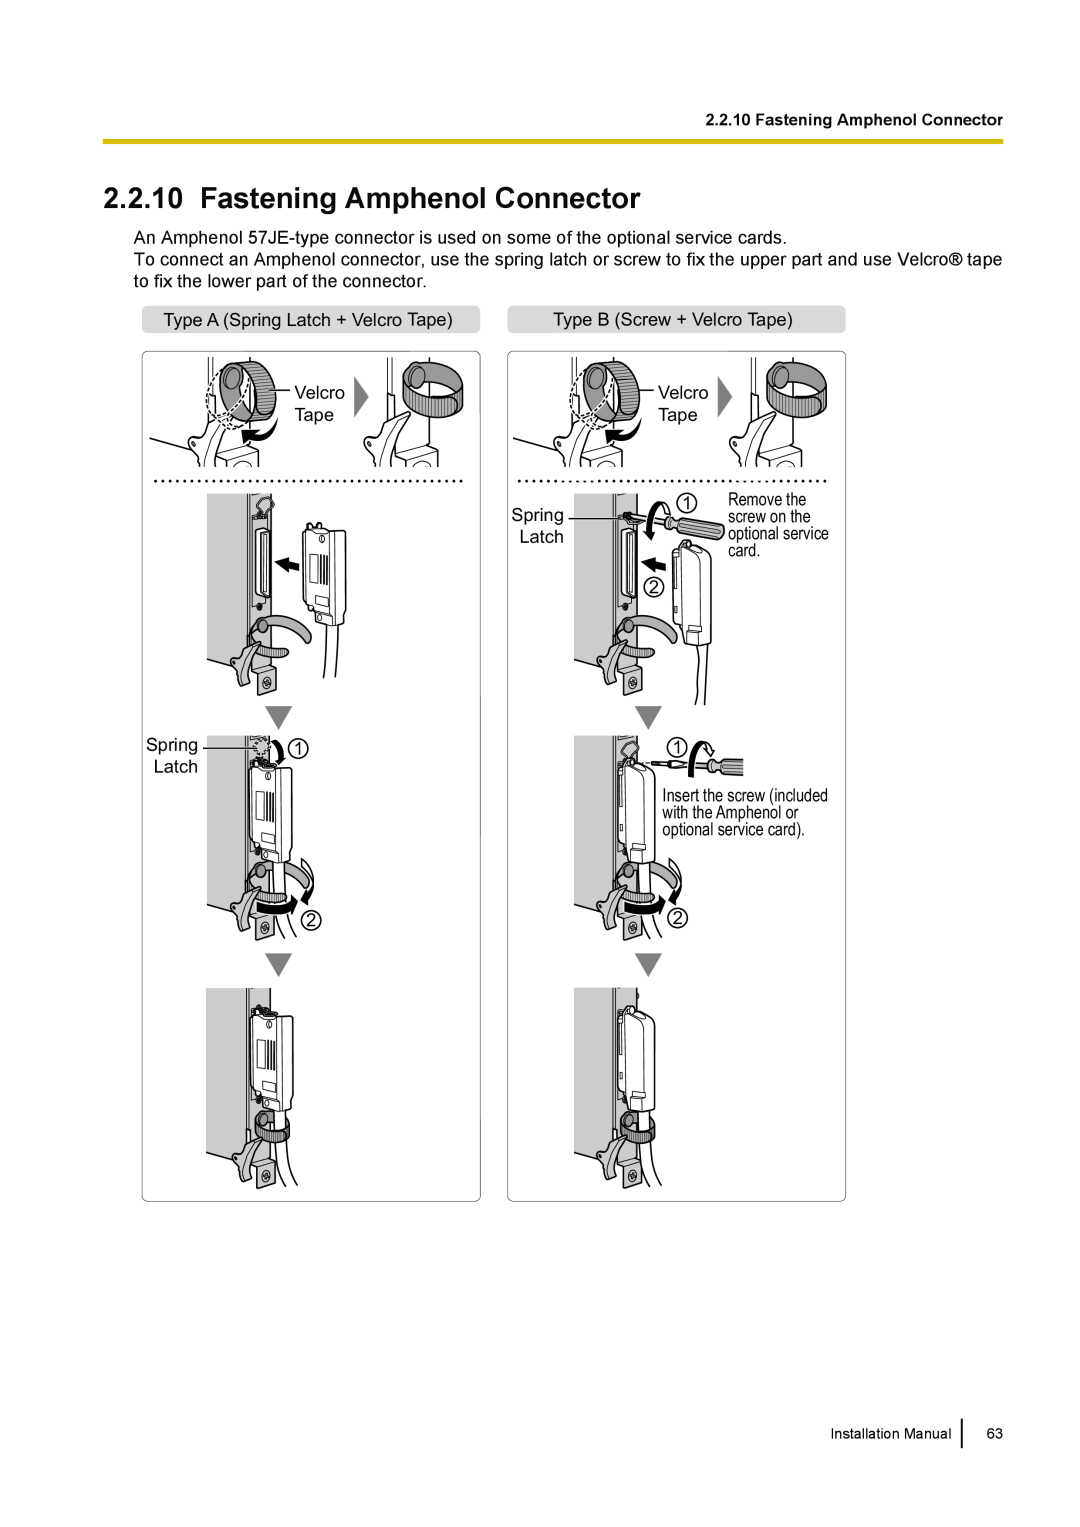 Panasonic KX-TDA100 installation manual Fastening Amphenol Connector 